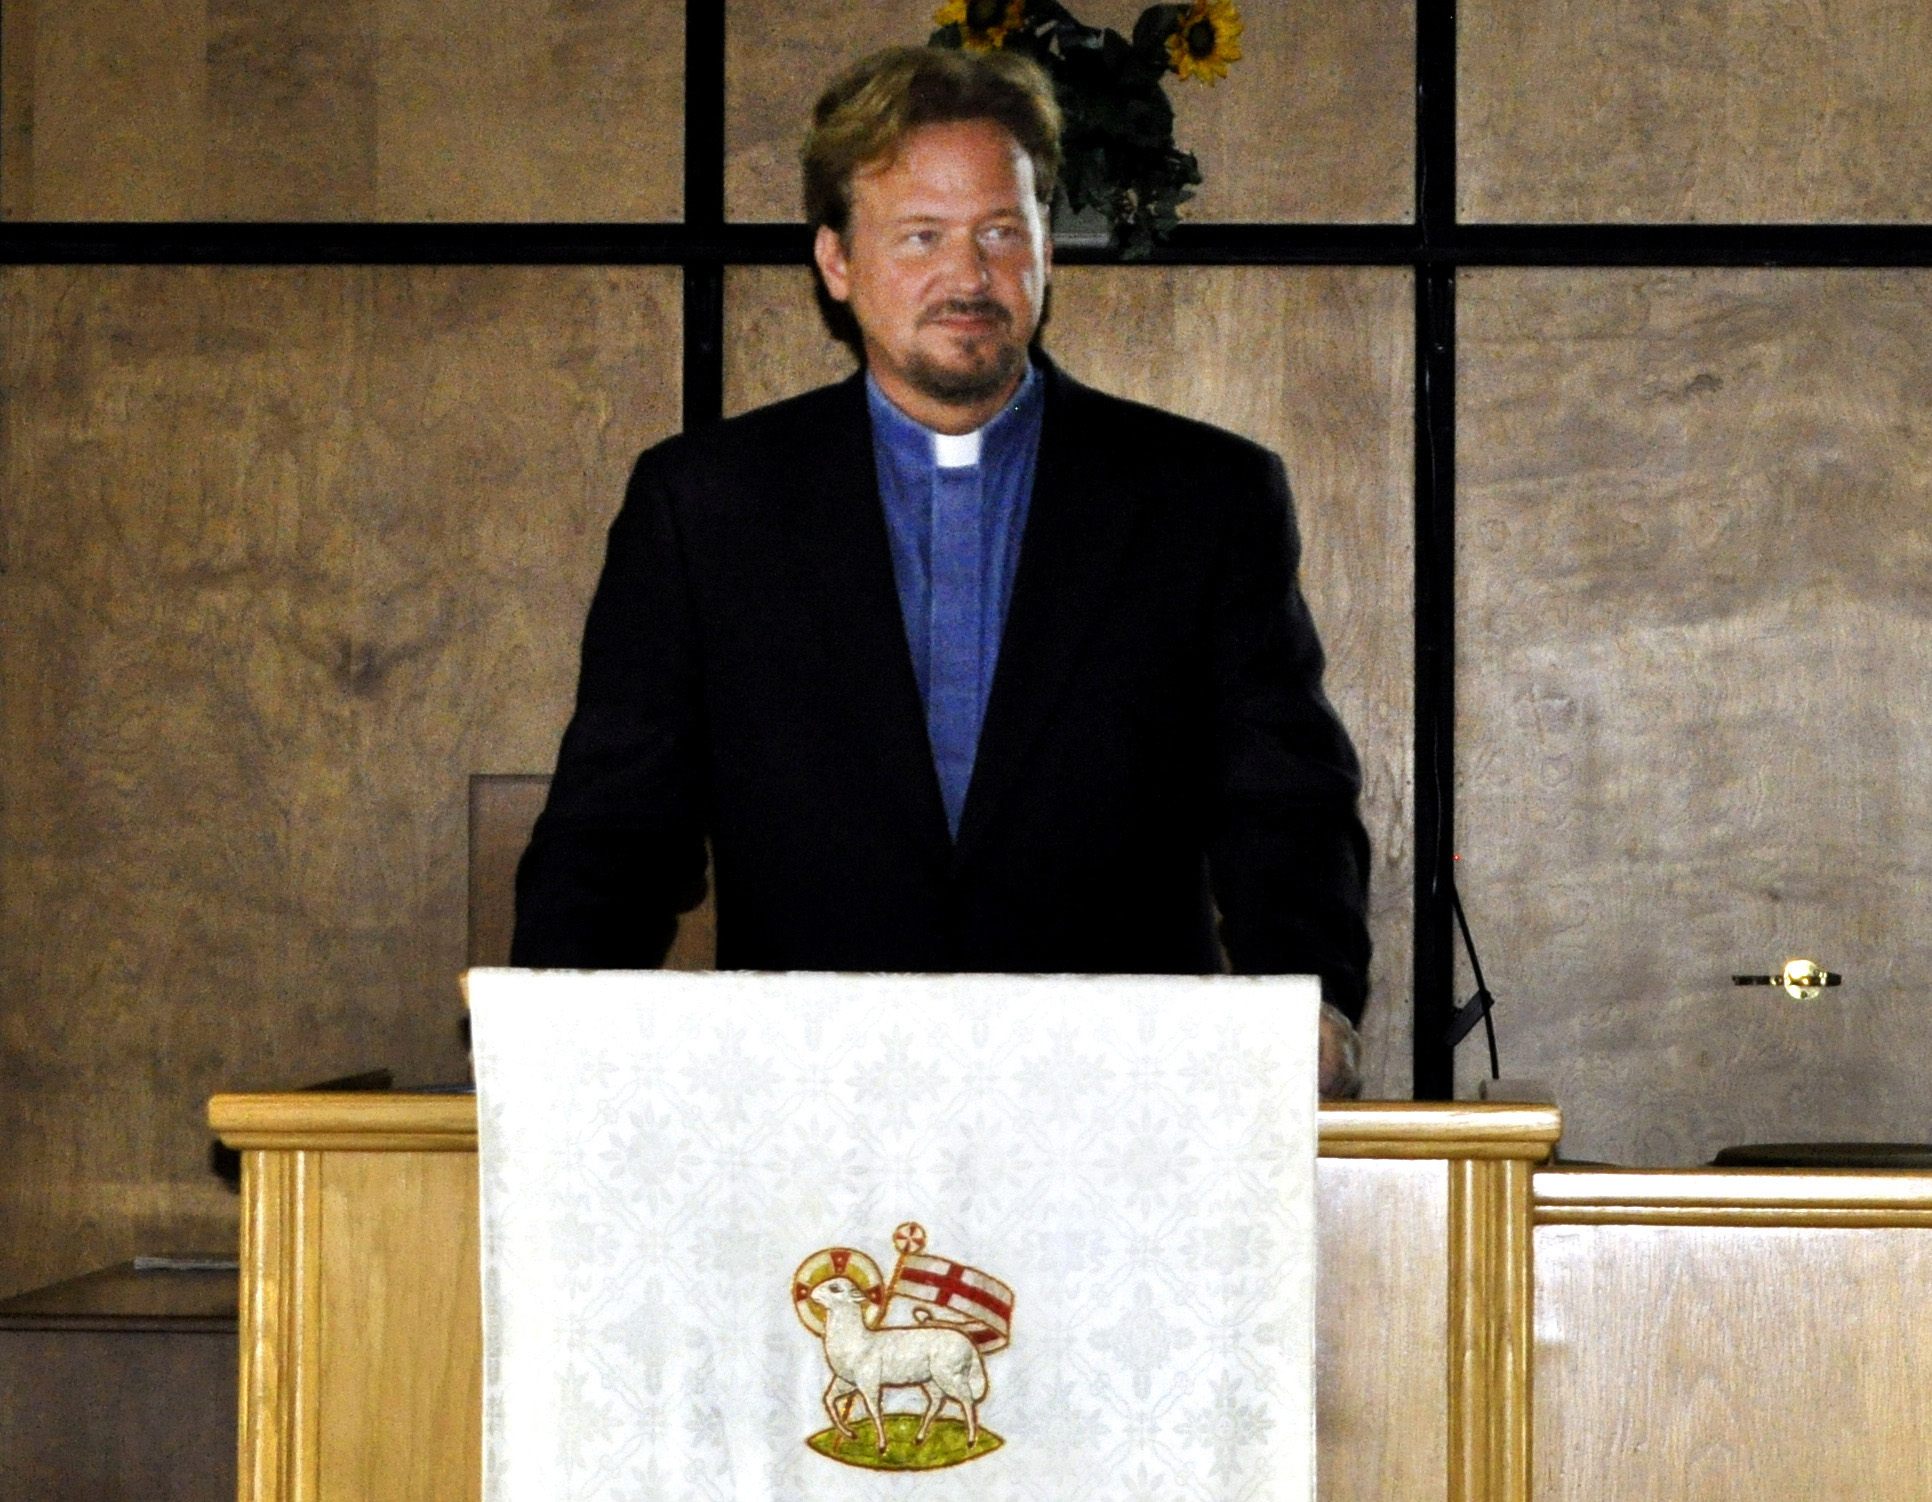 The Rev. Frank Schaefer preaches at his former parish, Zion Iona U.M. Church in Lebanon PA, 2012